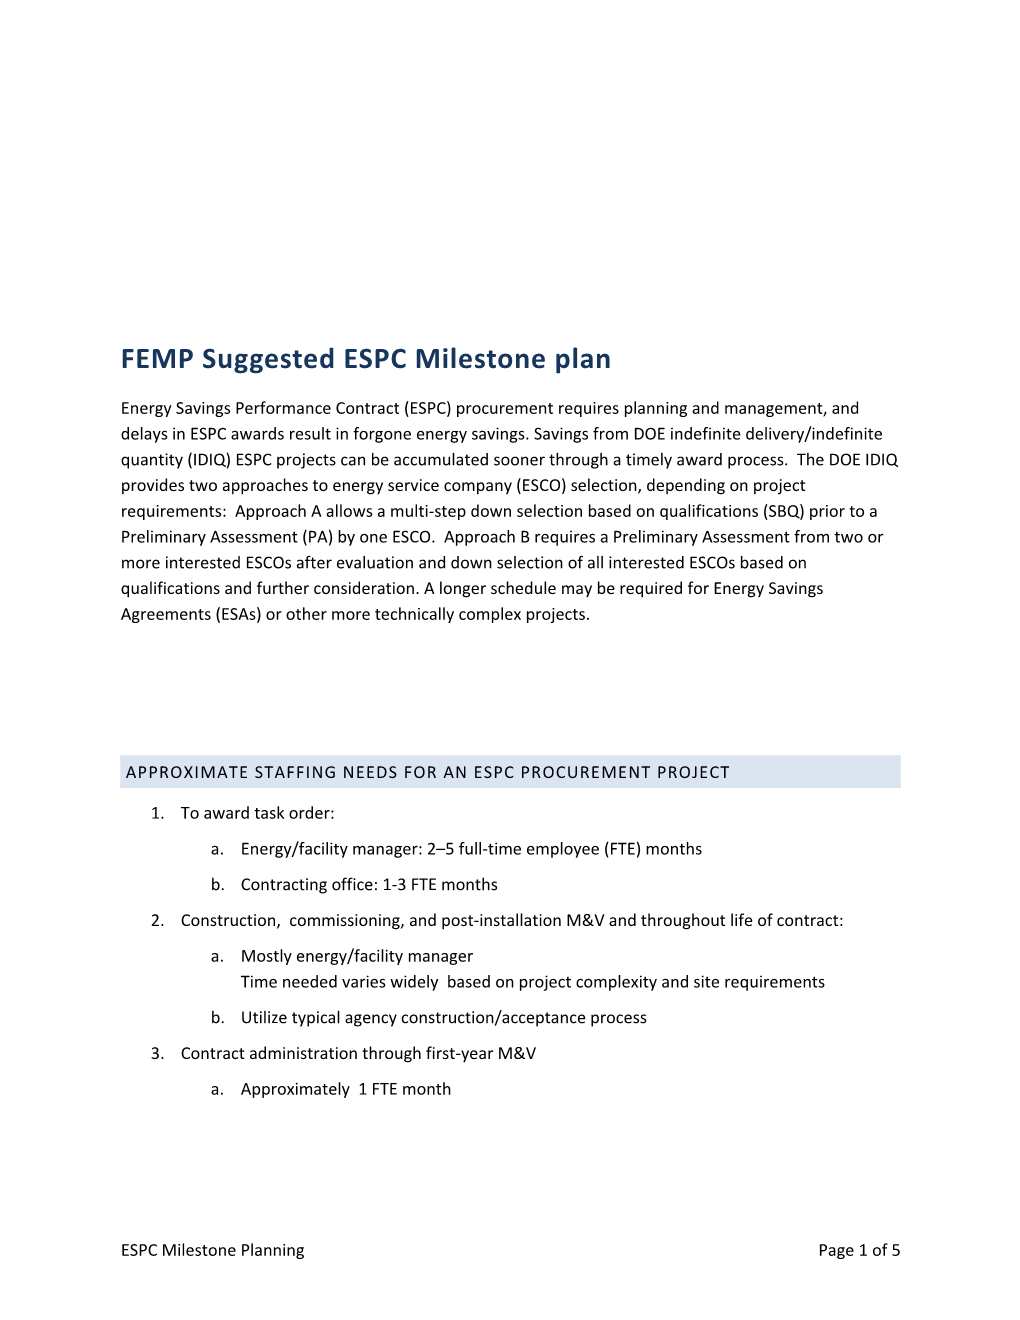 FEMP Suggested Milestone Plan s1